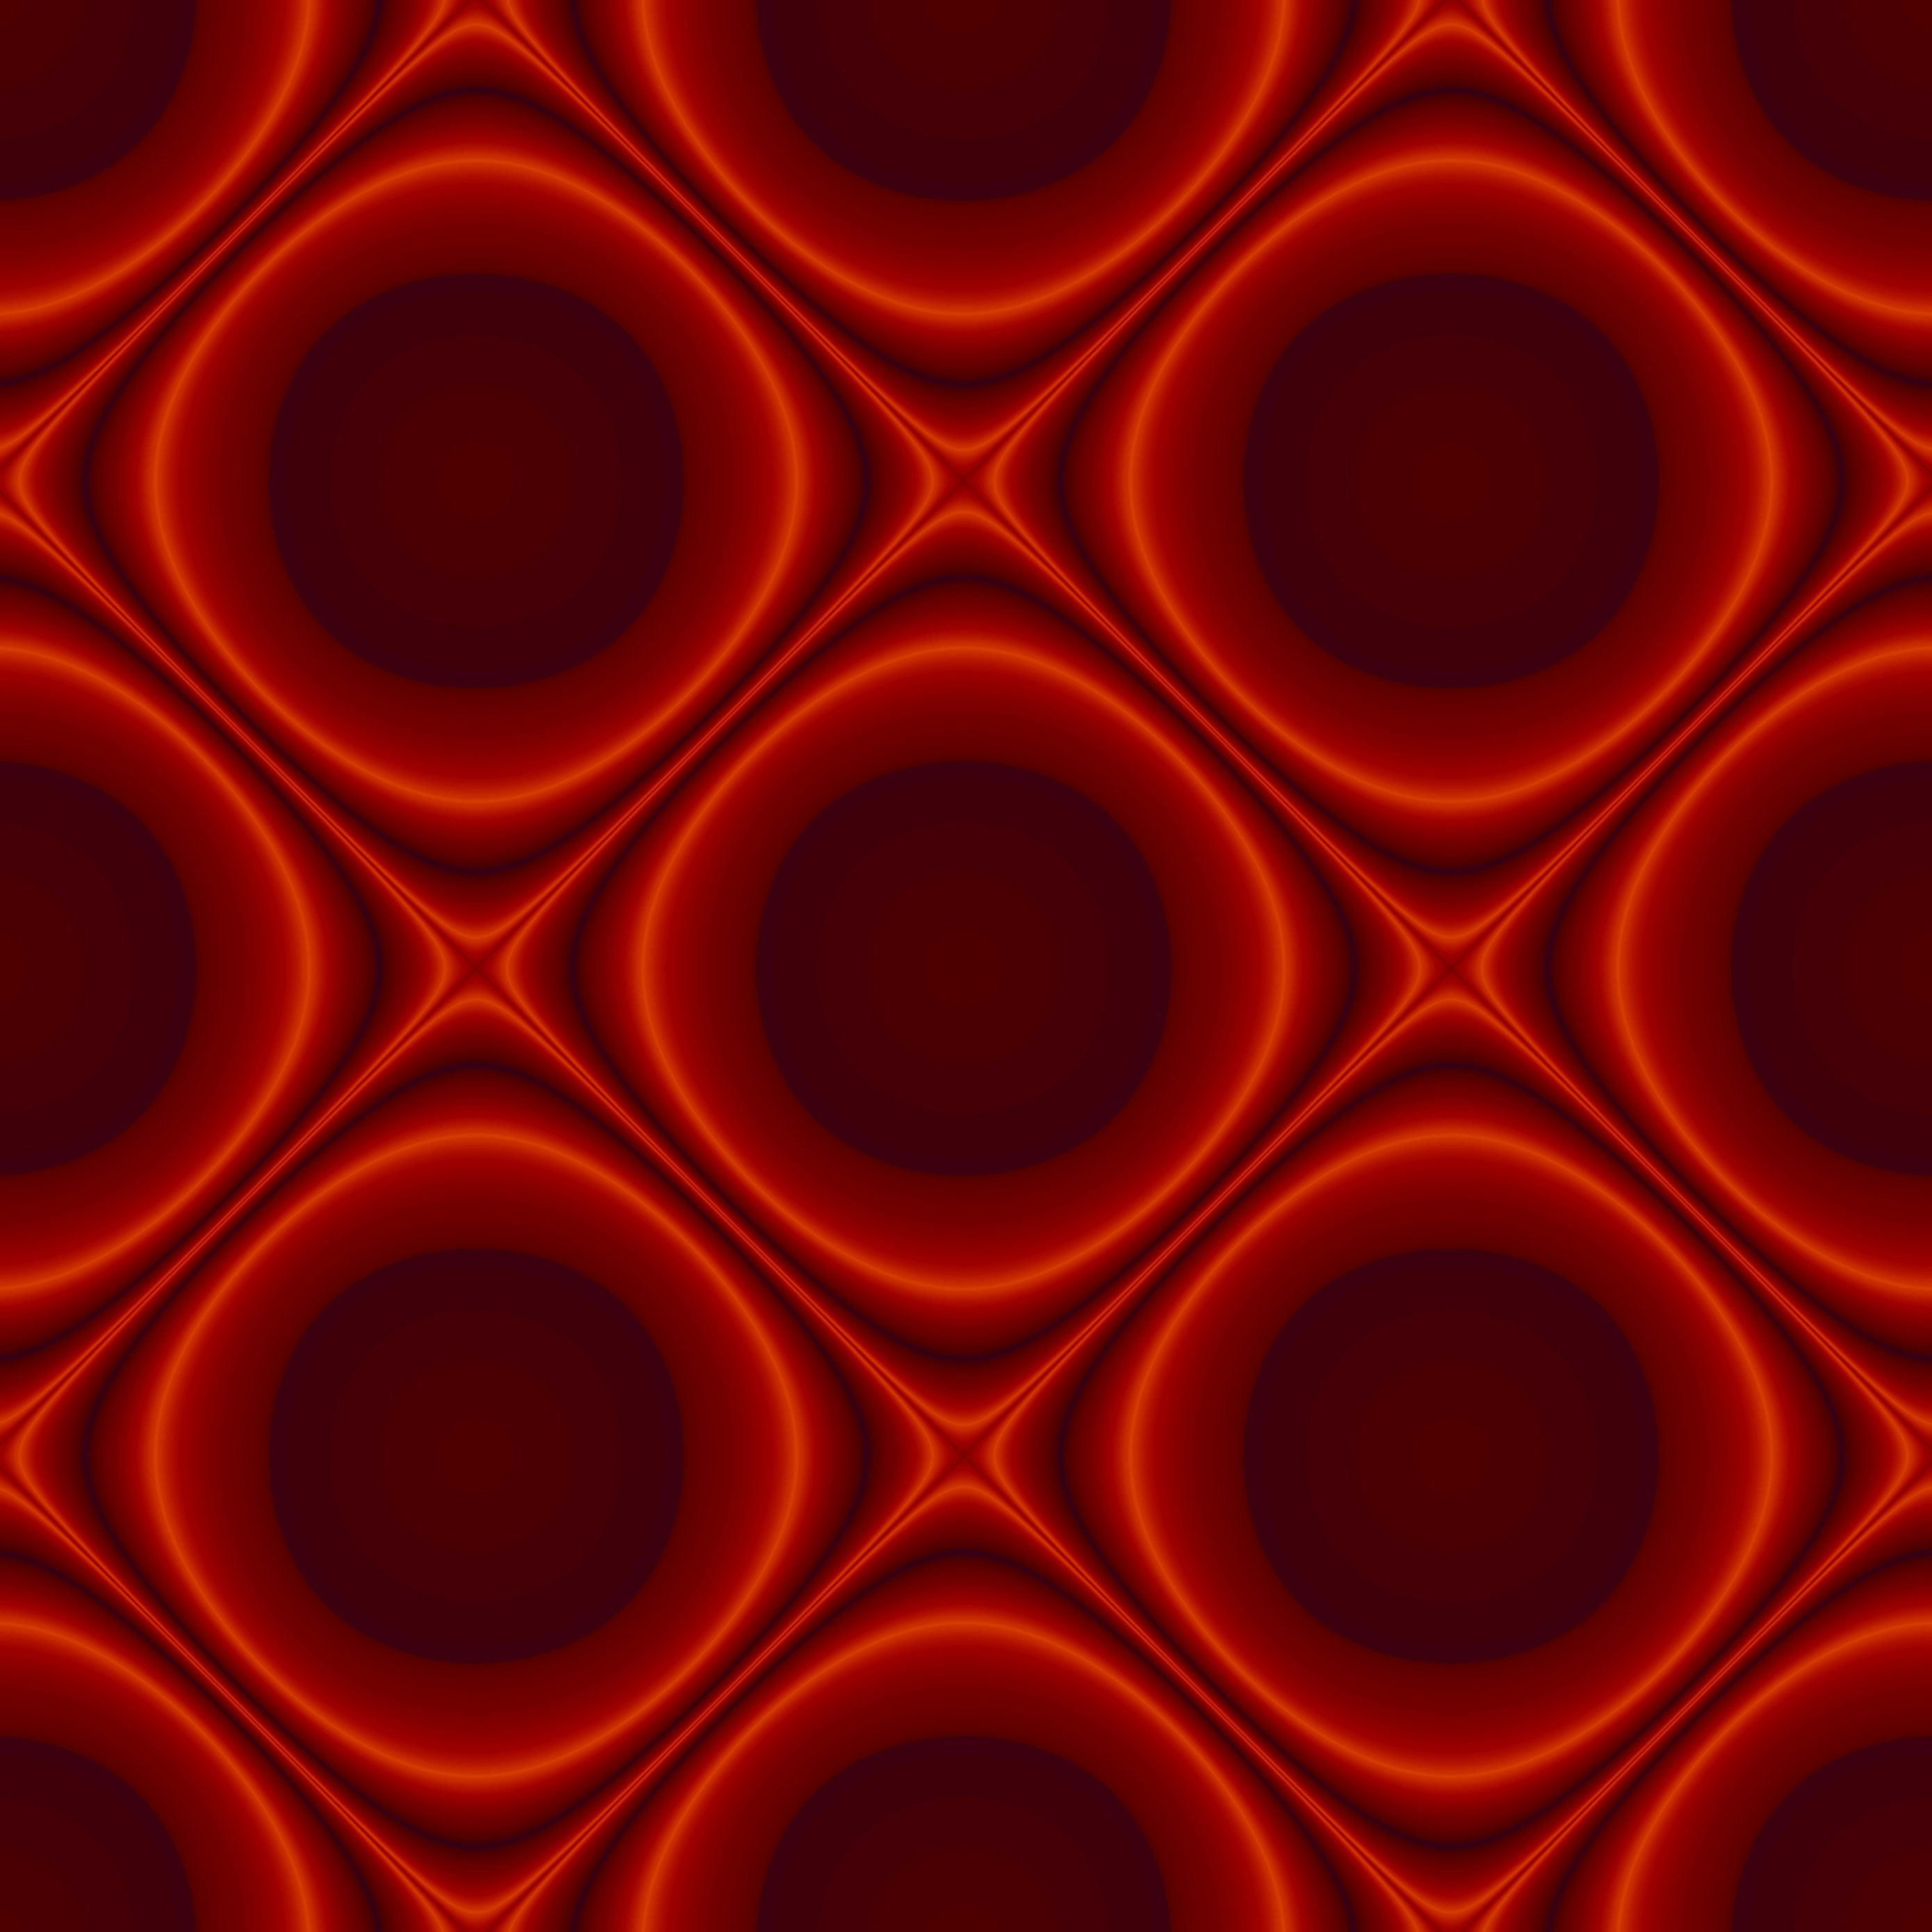 2780x2780 Parallax wallpaper 4k Abstract Pattern Design Red Ipad Wallpaper 2780x2780 pixels resolution